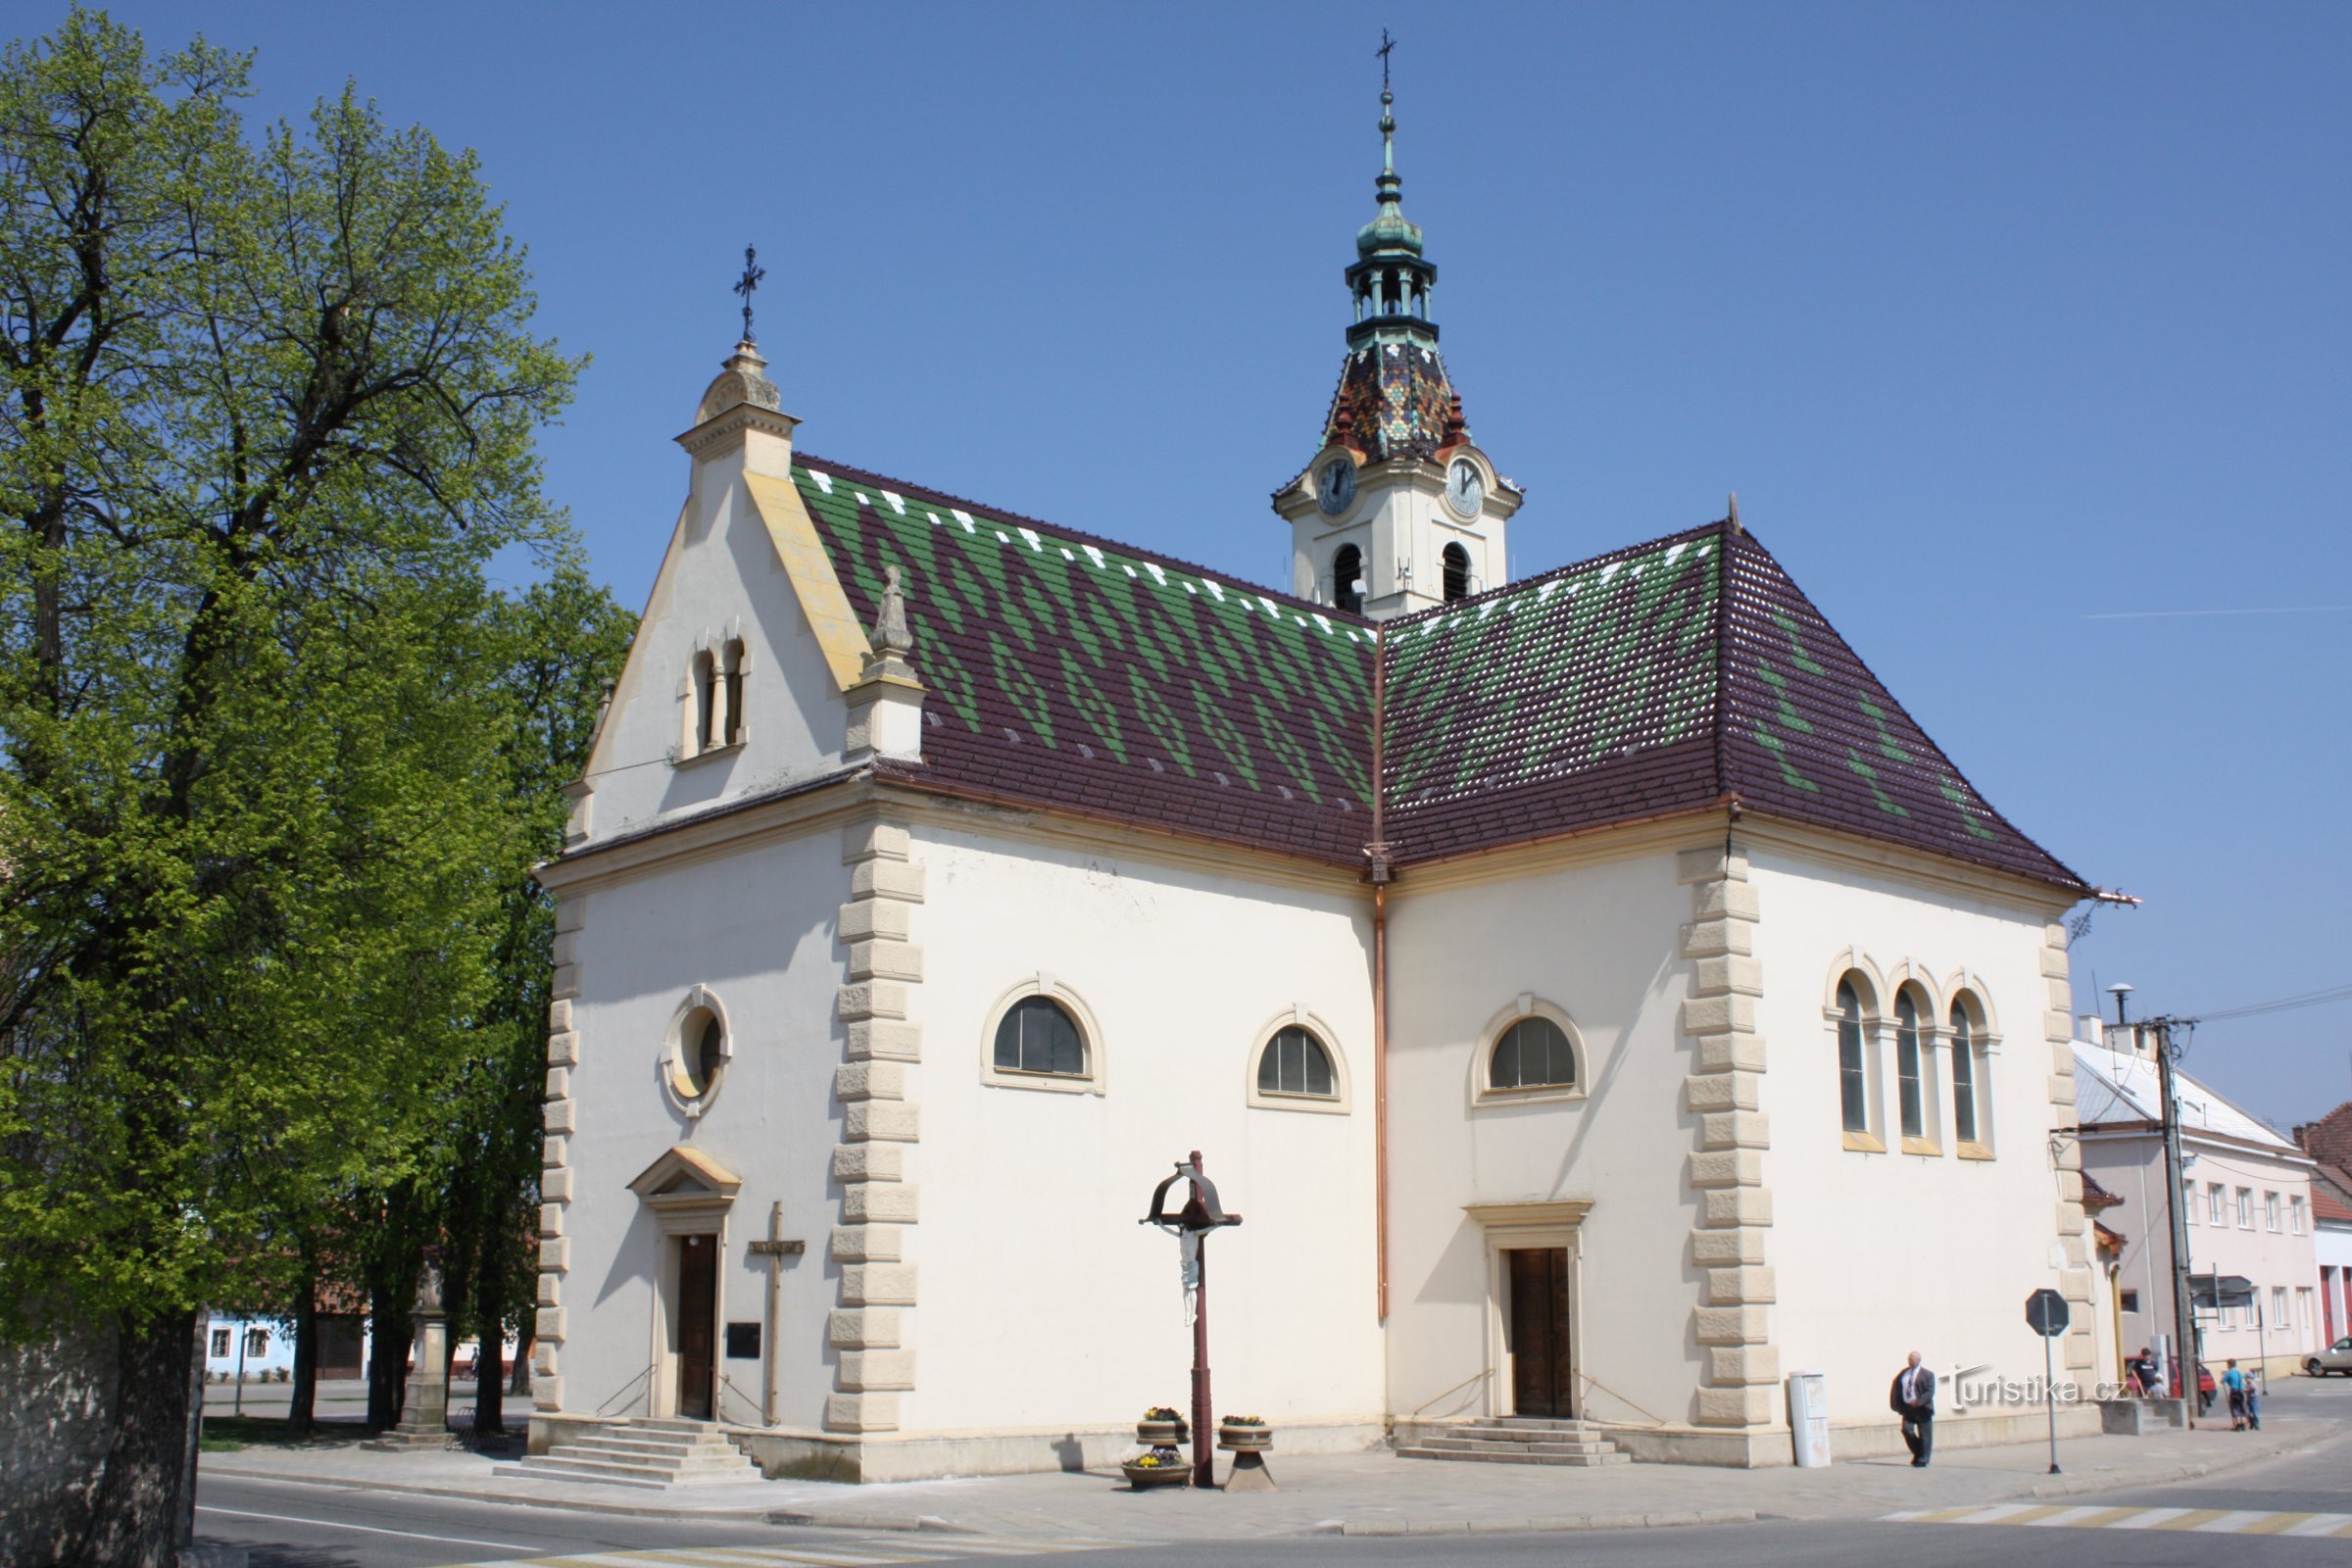 The trip route starts in Lanžhota near the church